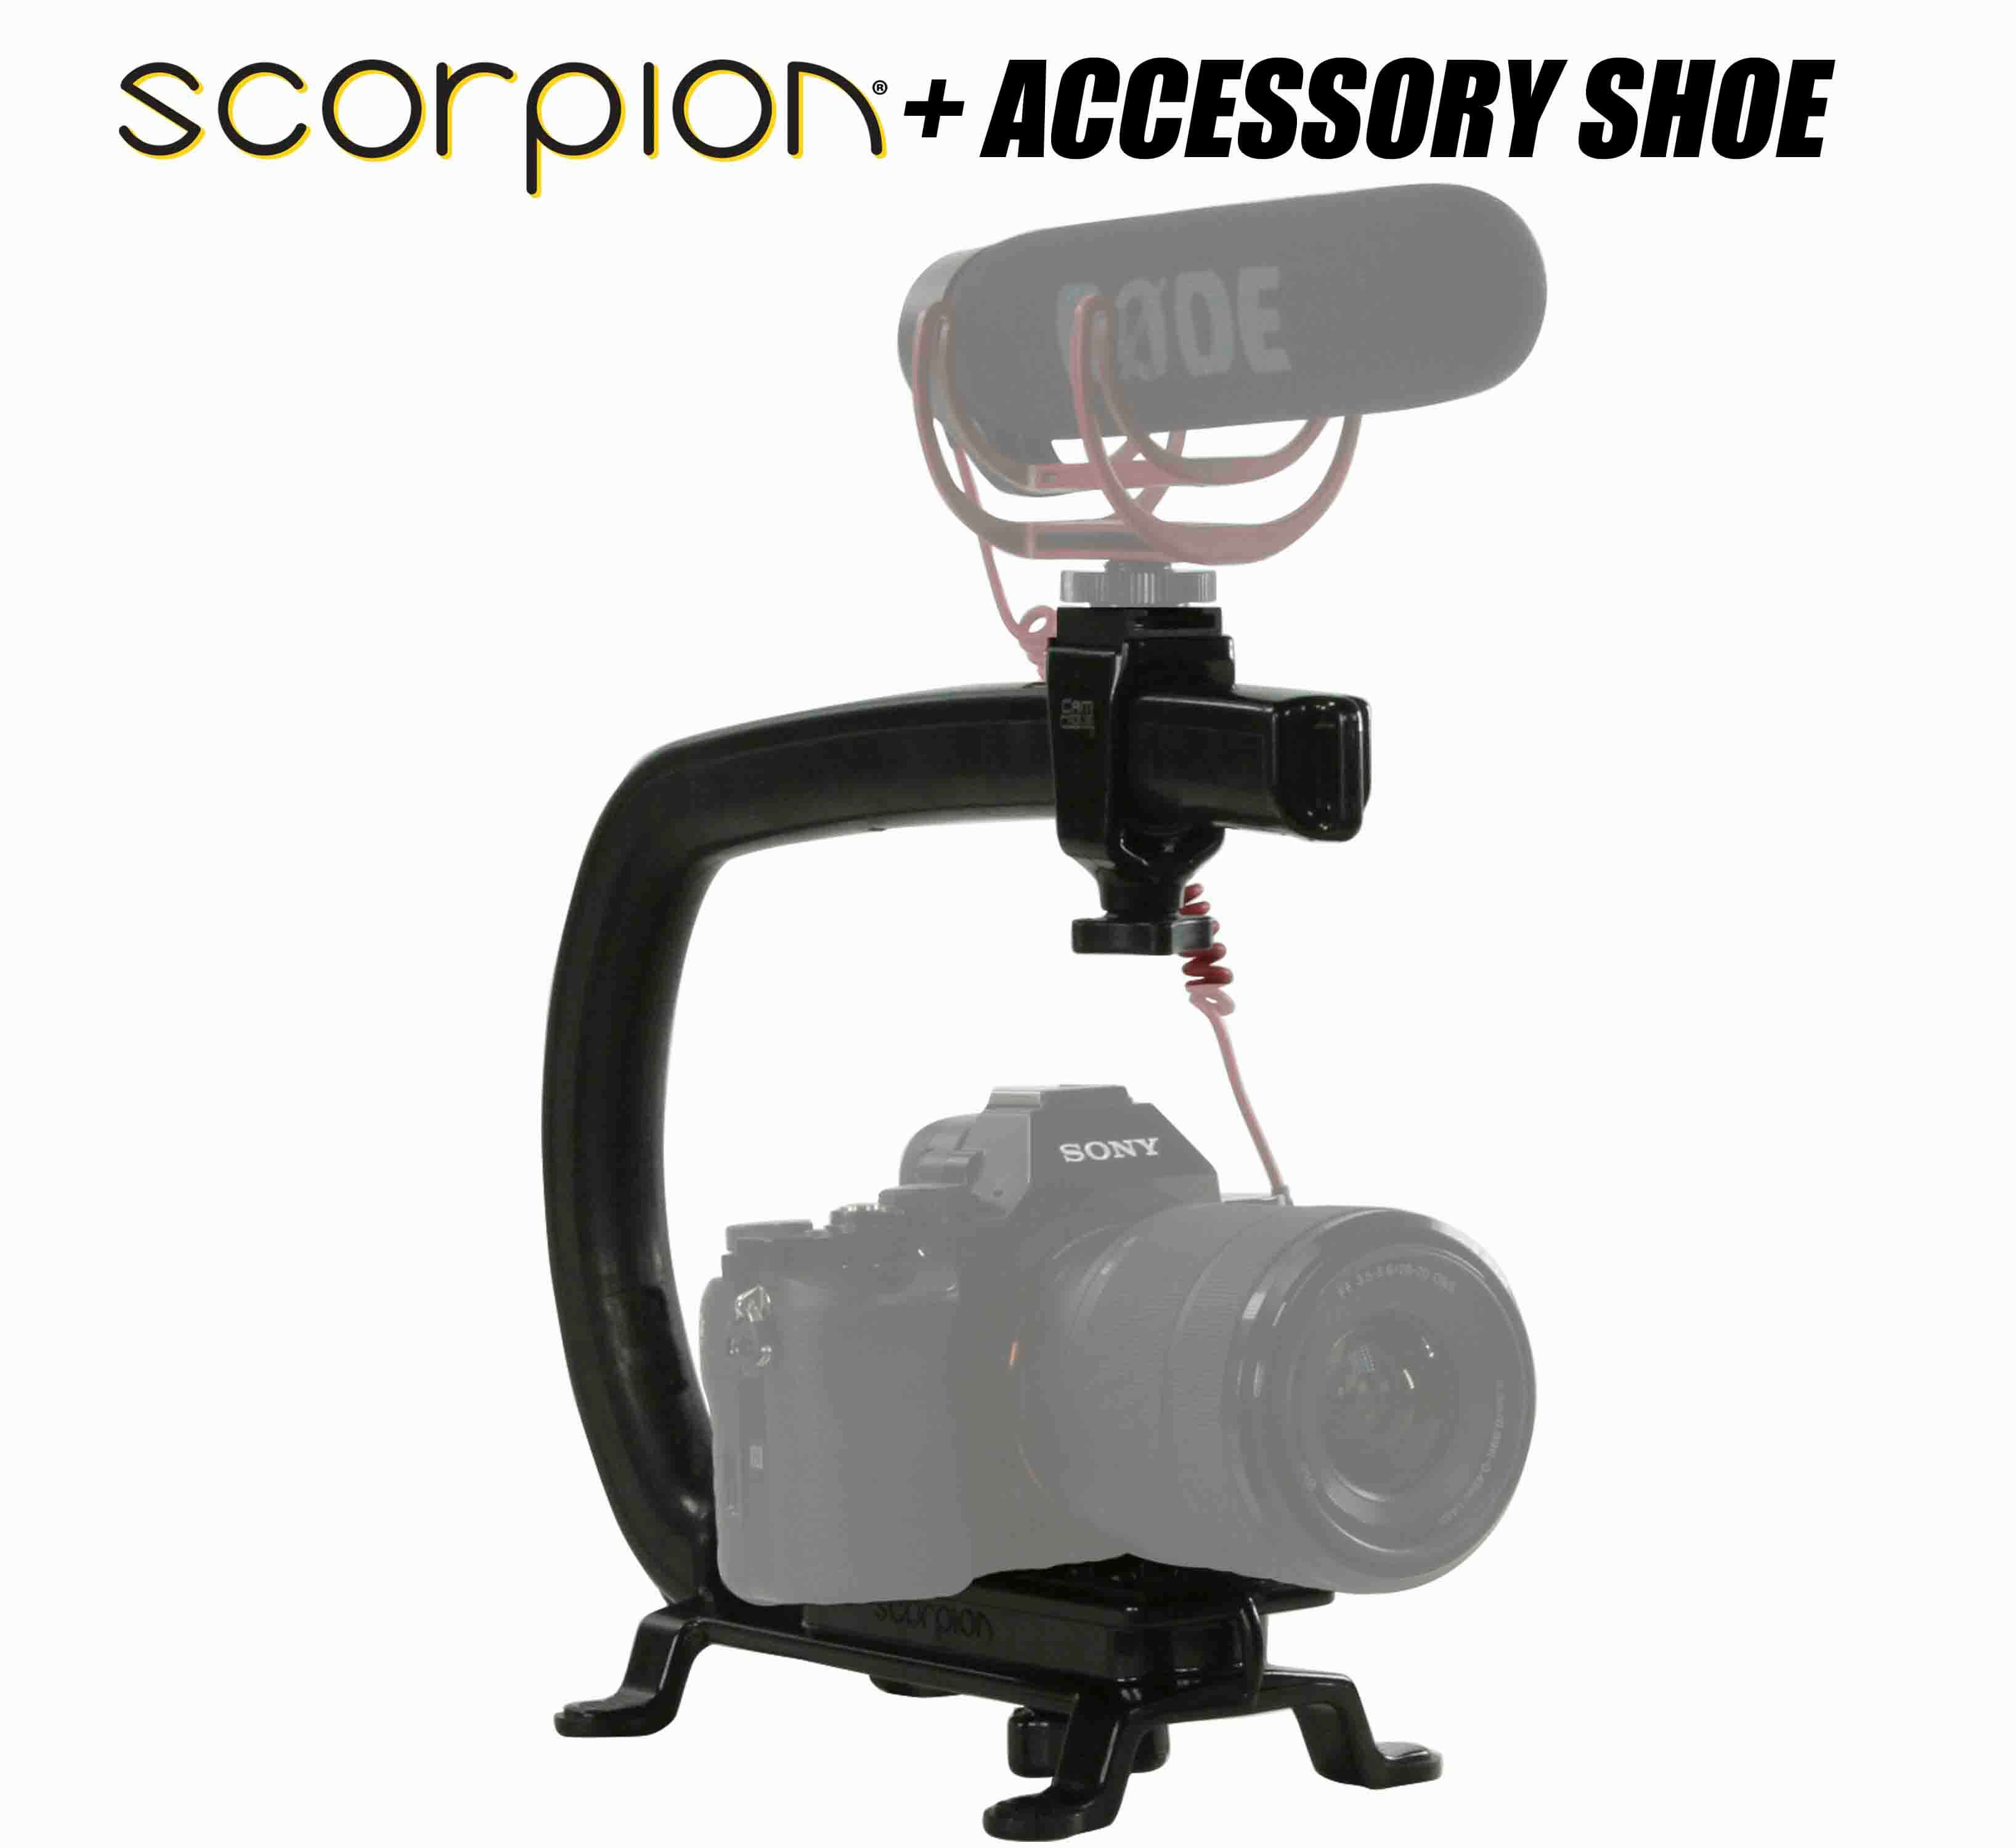 DIY: Building the Black Scorpion GoPro DSLR Stabilizer (Video